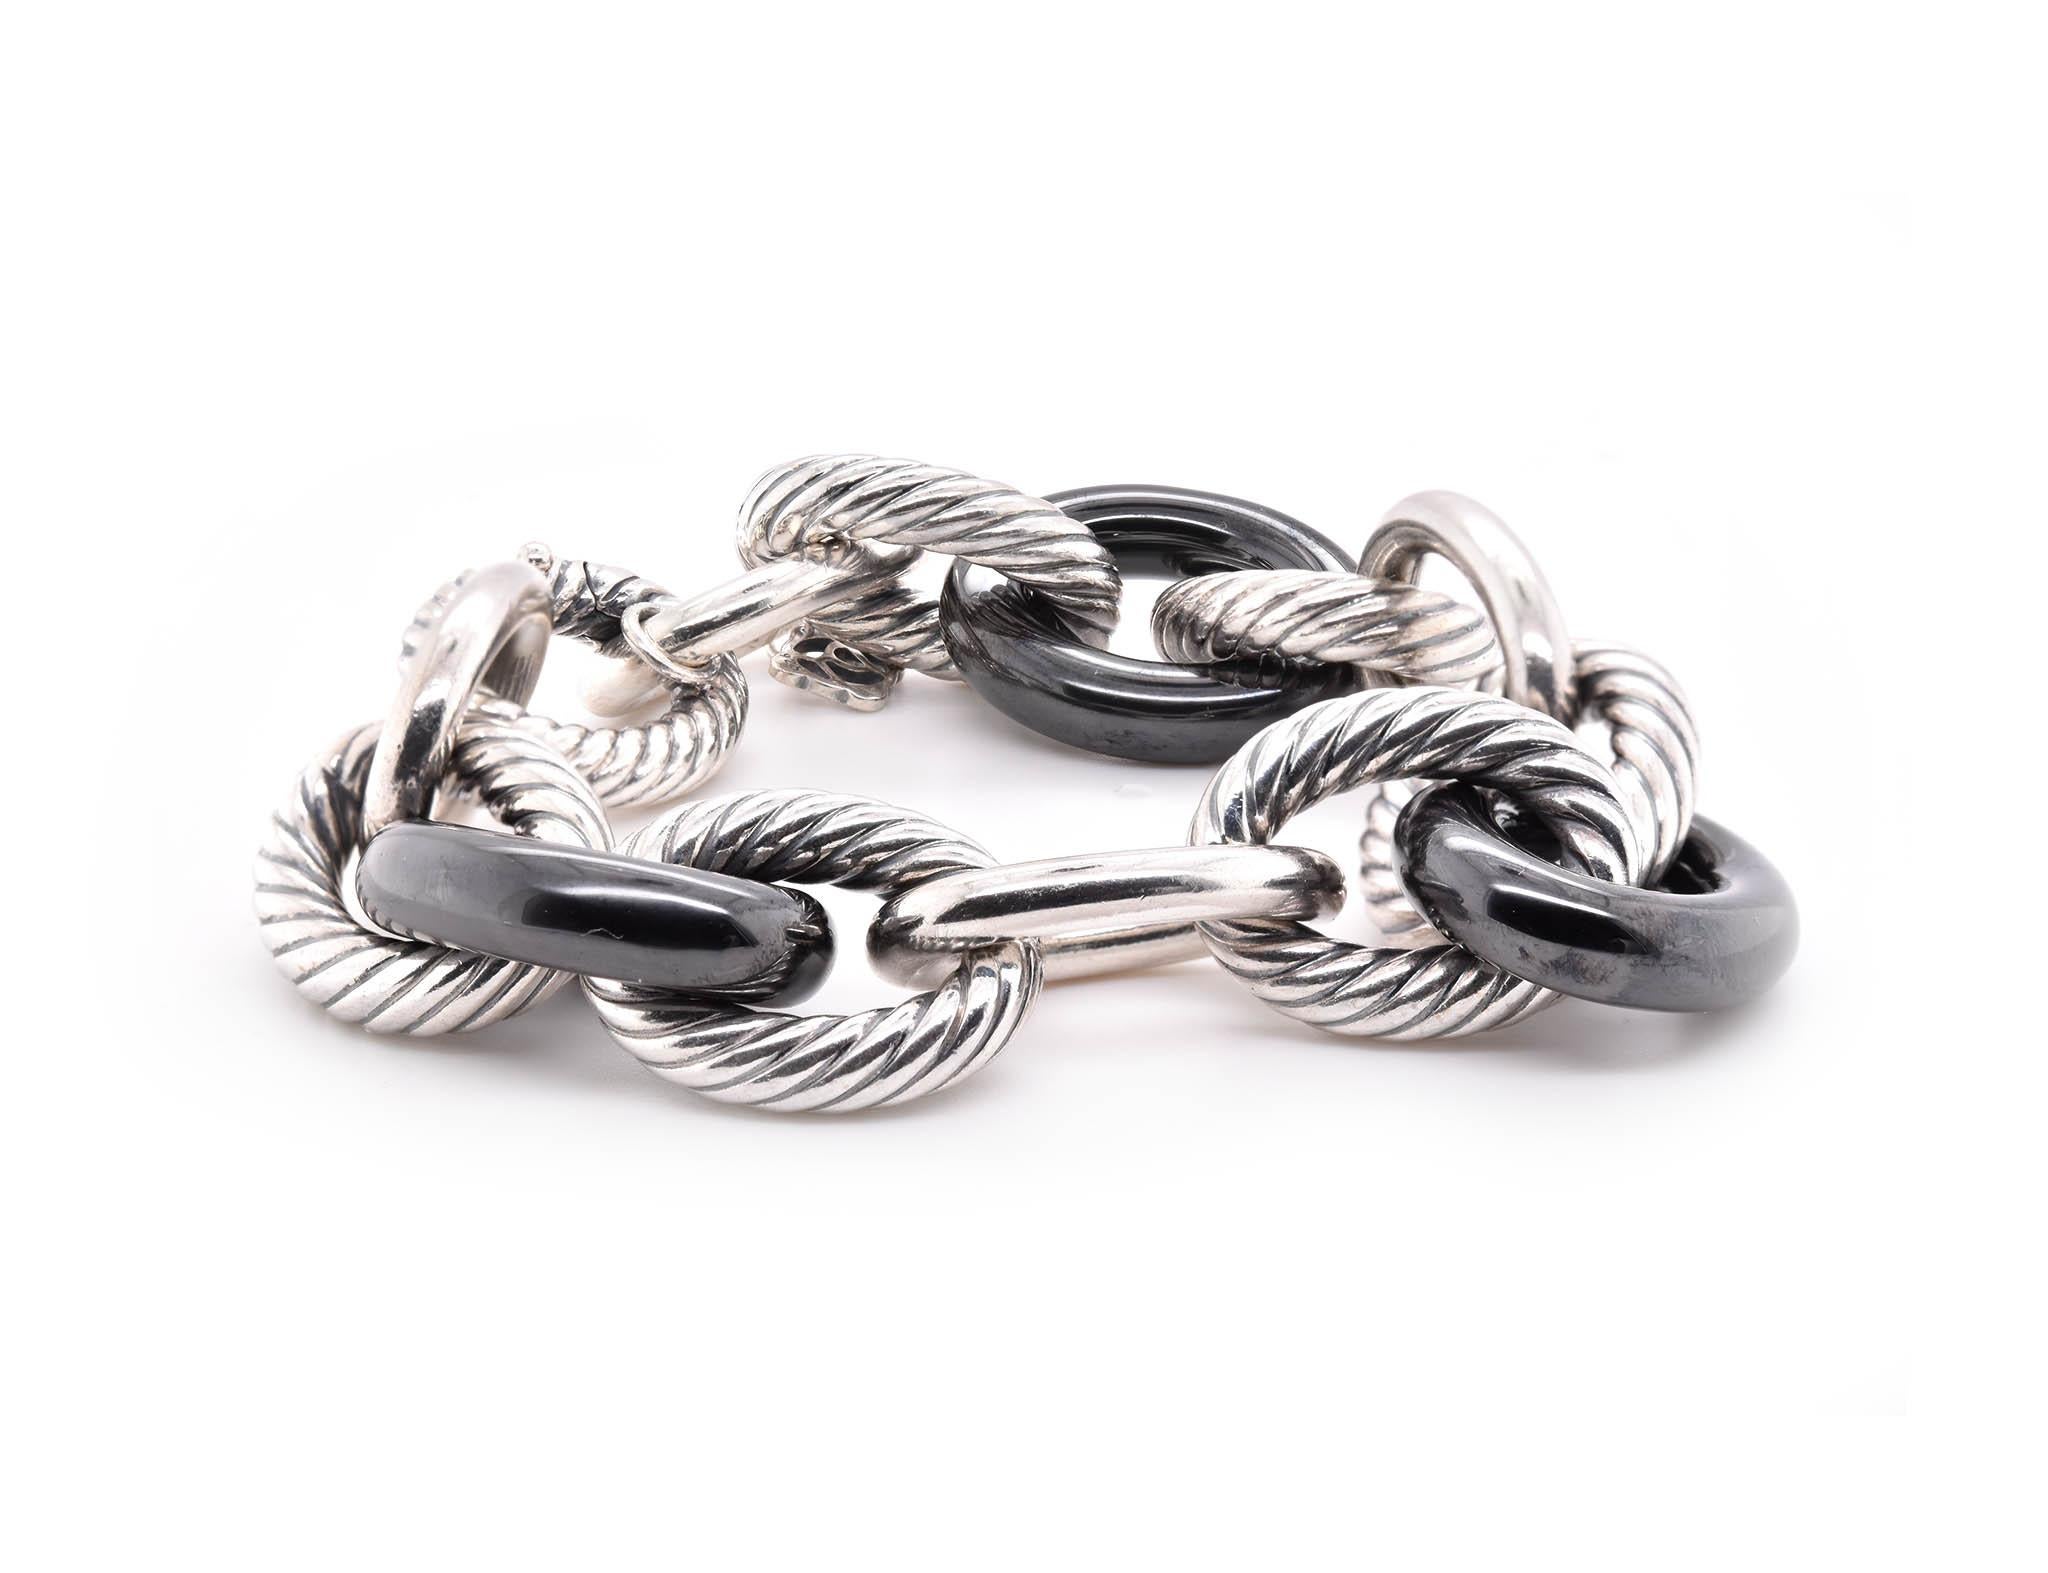 Designer: David Yurman
Material: Sterling Silver & Black Ceramic
Dimensions: bracelet measures 8.5-inches long
Weight: 65.04 grams